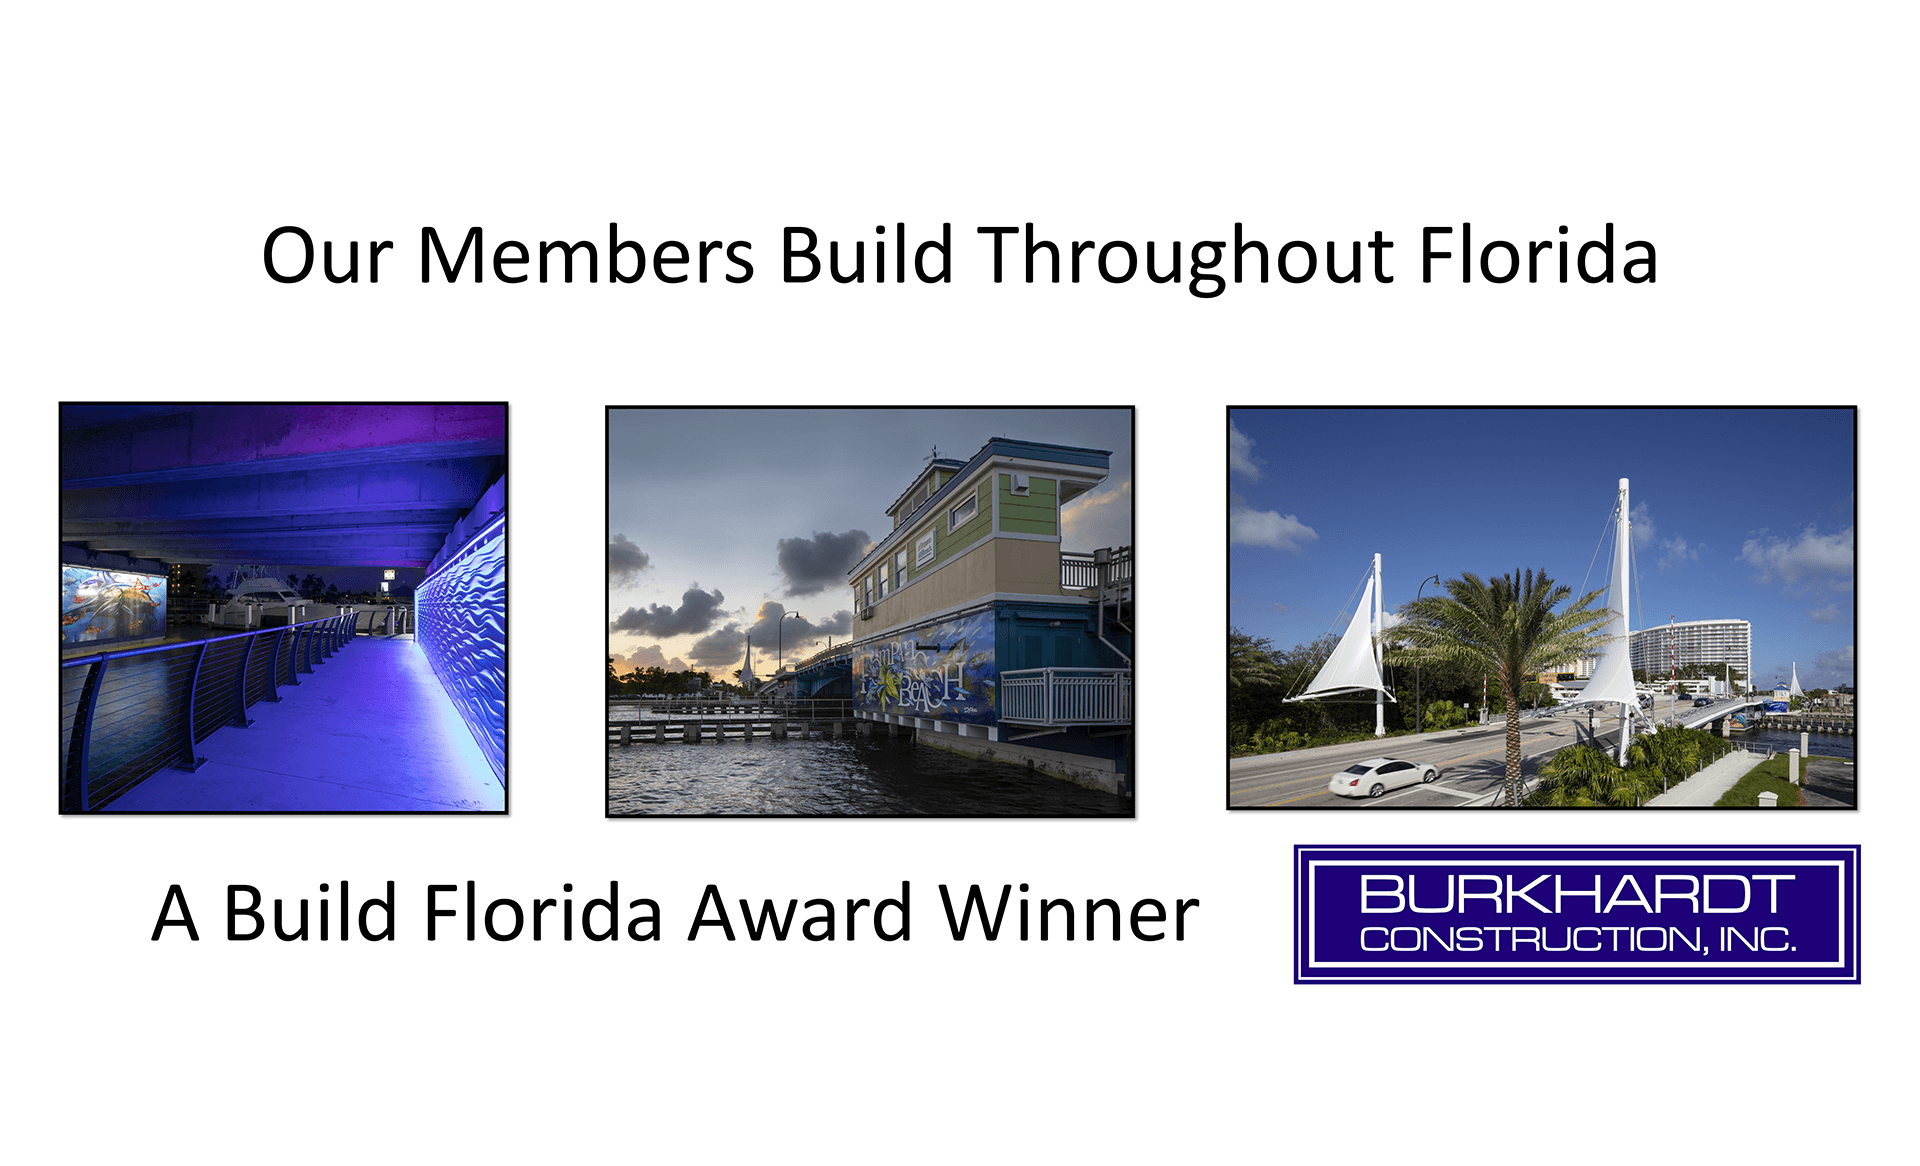 A Build Florida Award Winner Burkhardt